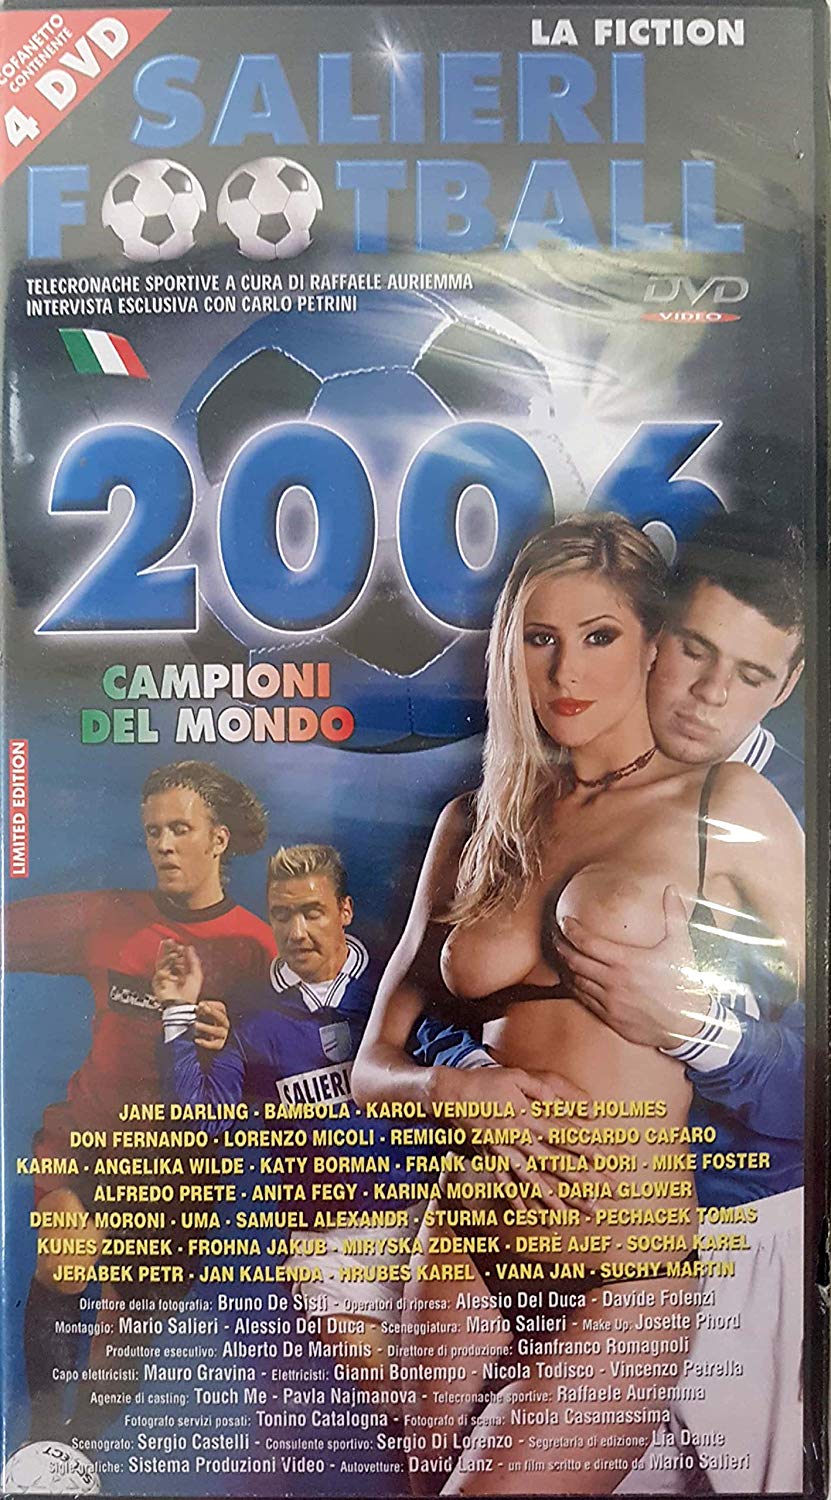 831px x 1500px - Salieri football 2006 - la Fiction - 4 DVD - ErosDvd.it - dvd hard, film  porno, acquista online